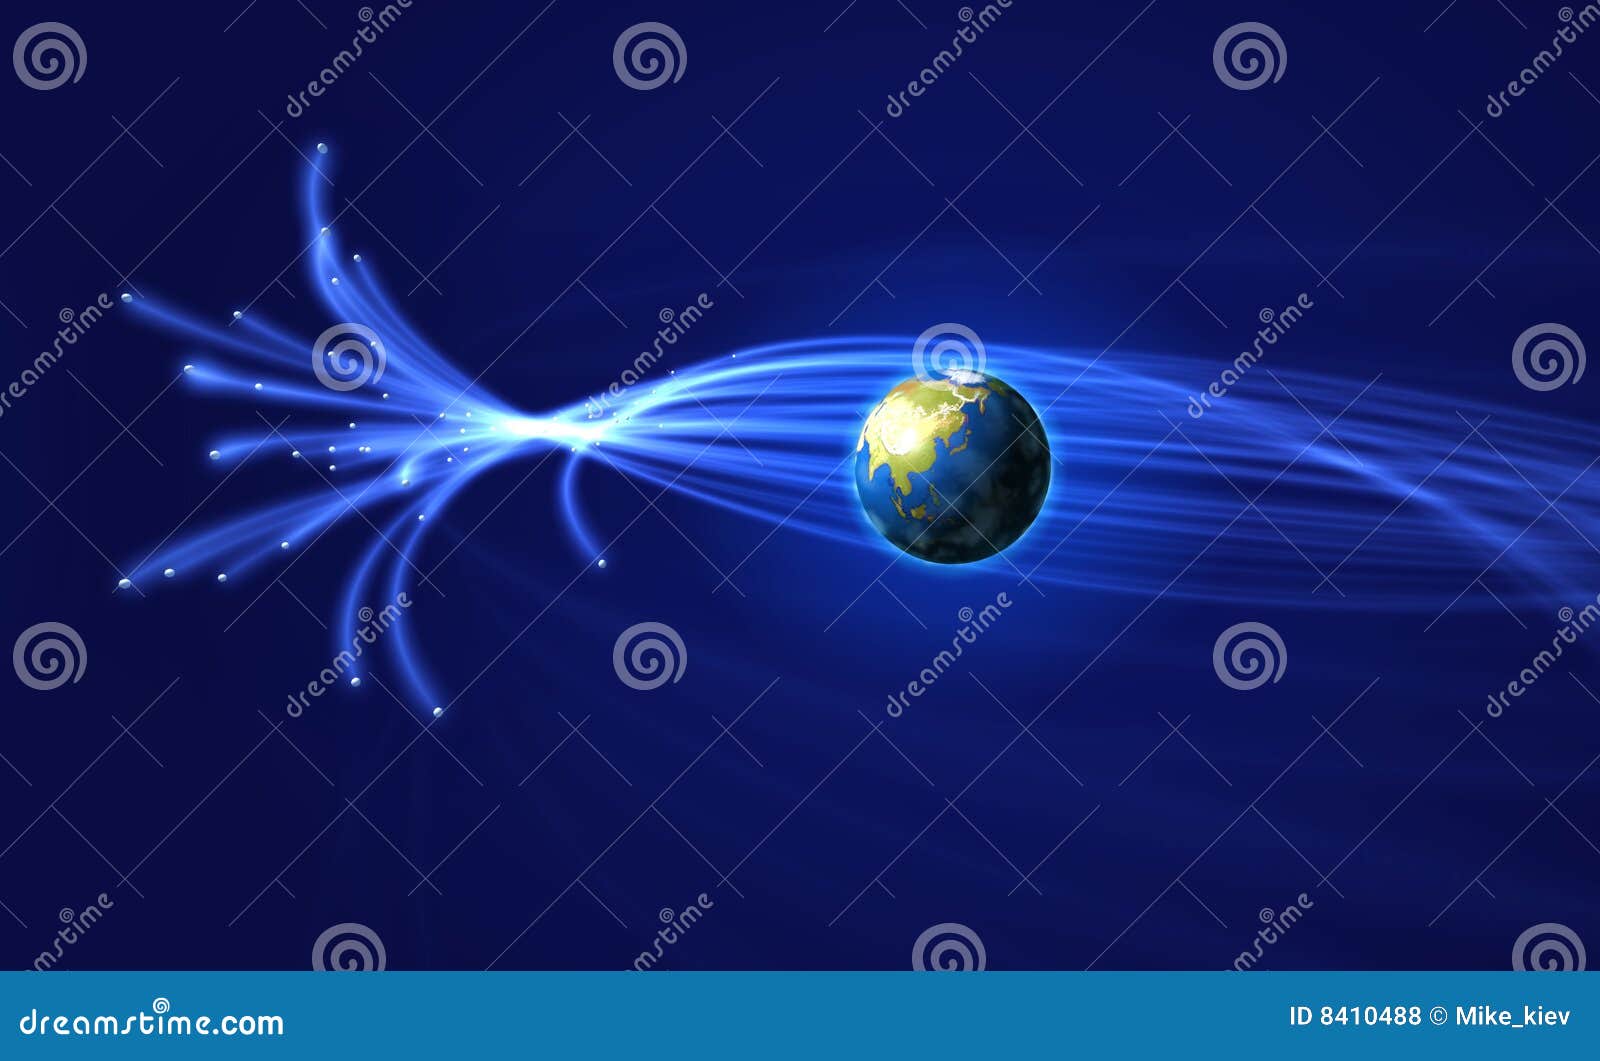 satellites surrounding earth